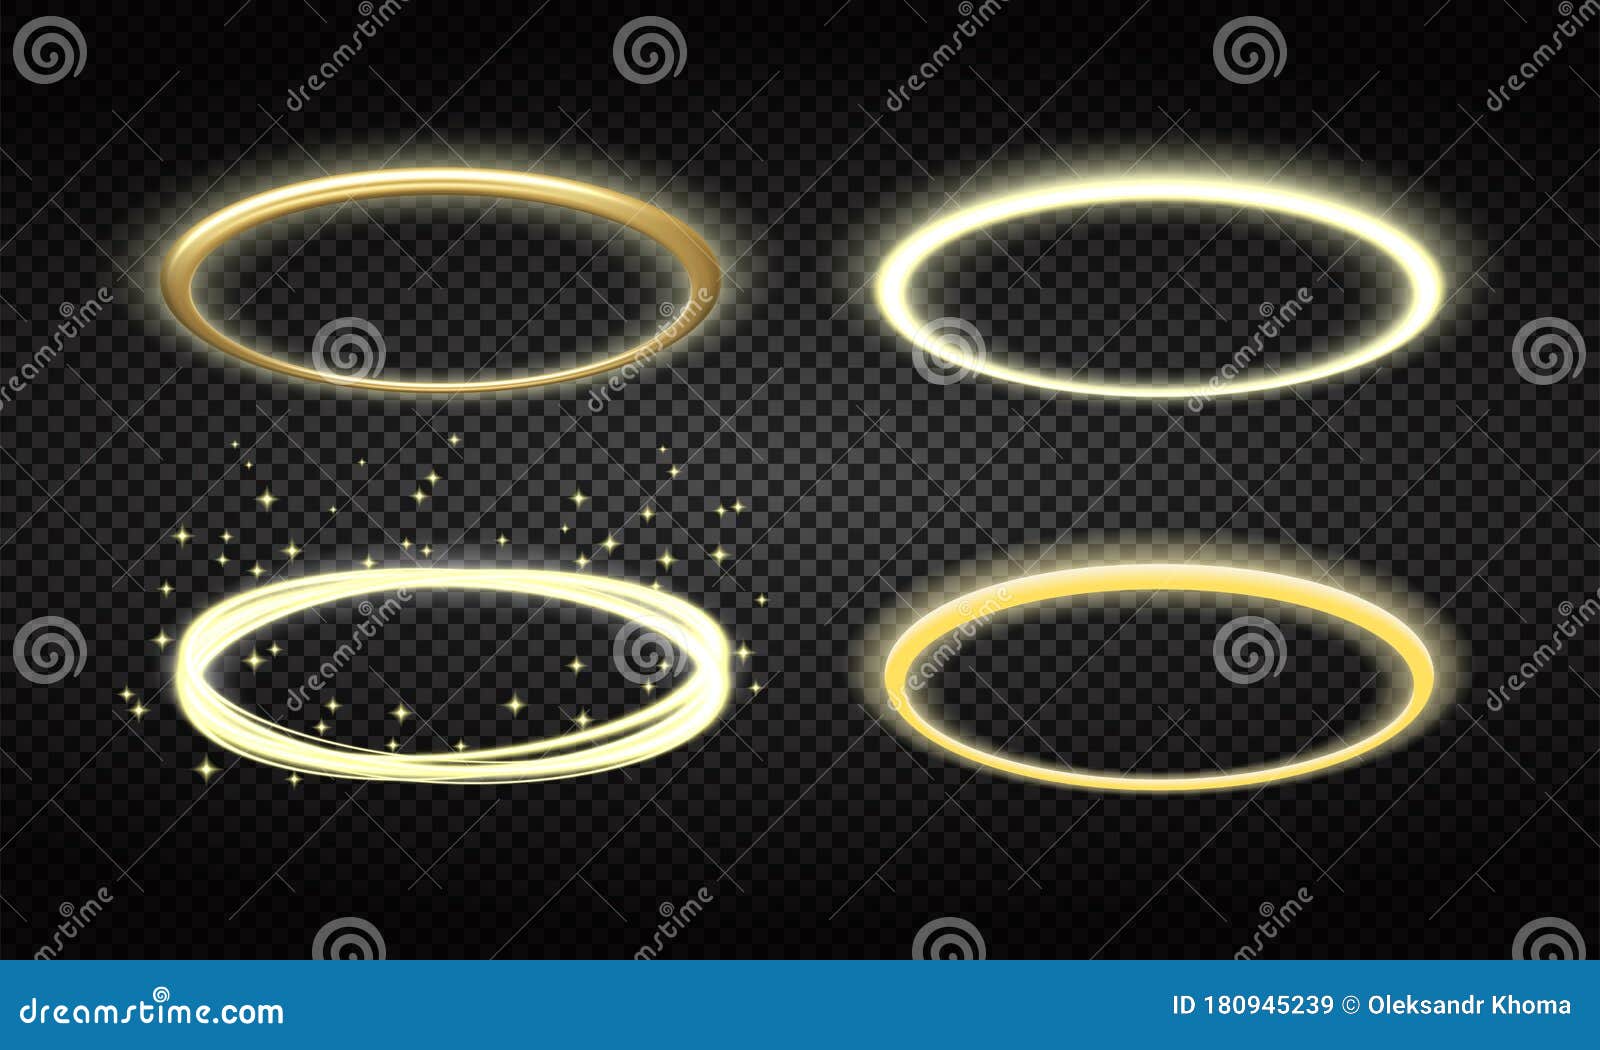 luminous halo set, various golden angel ring